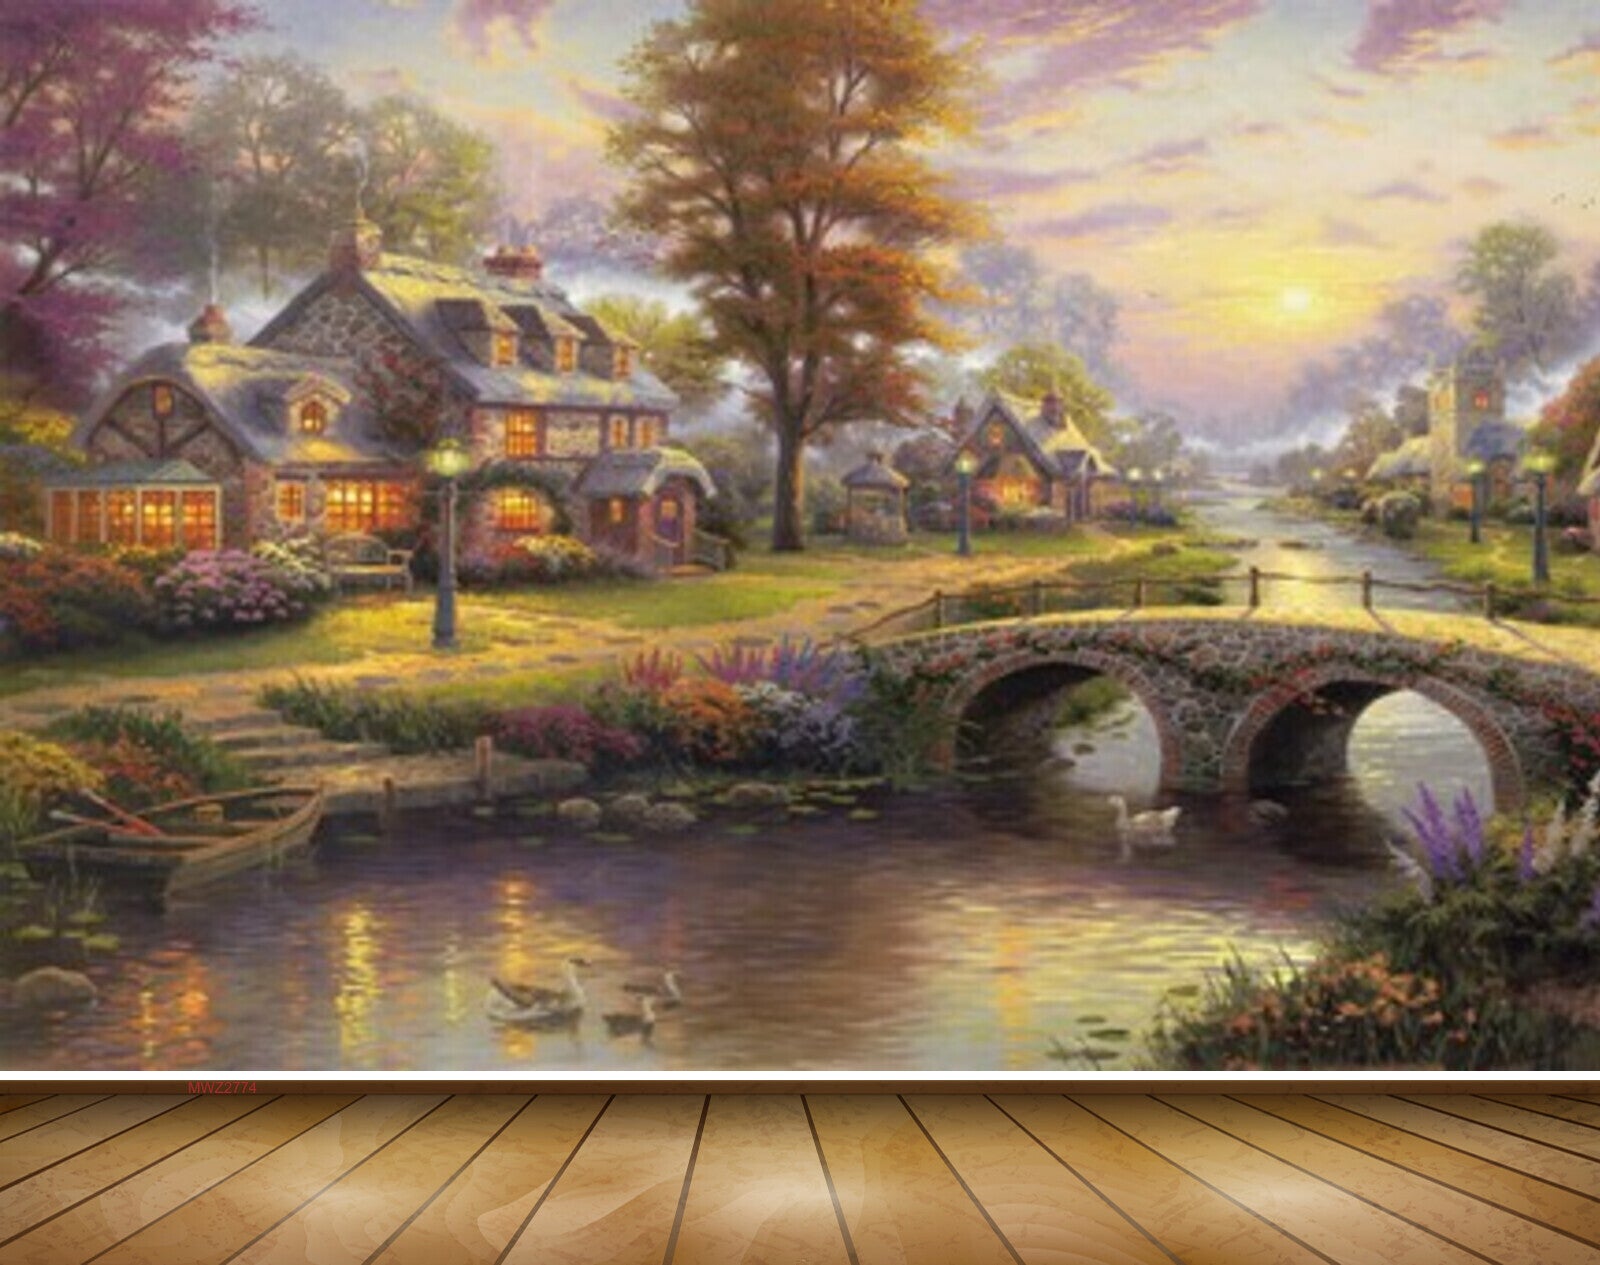 Avikalp MWZ2774 Houses Trees Sun Purple Leaves Lamps Clouds Bridge Ducks Boat Painting HD Wallpaper